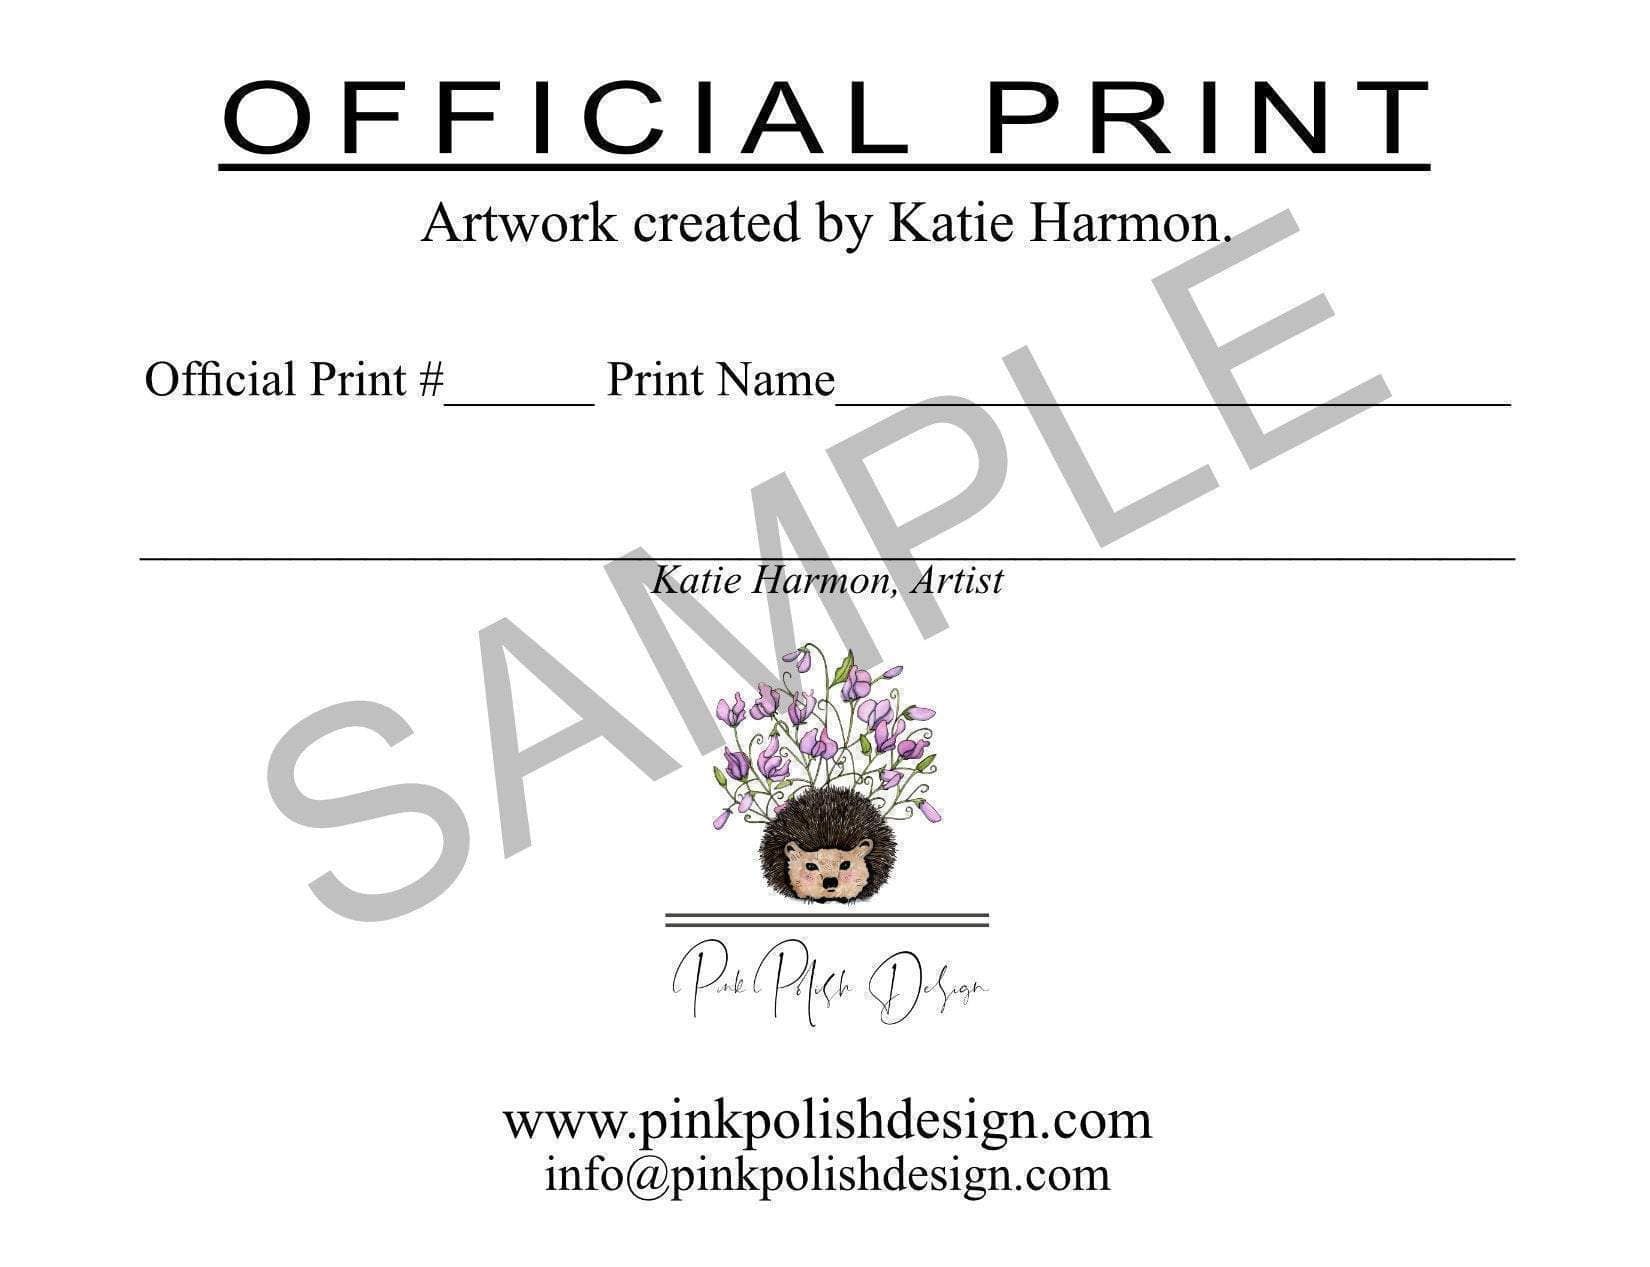 PinkPolish Design Art Prints "Sour" Ink Drawing: Art Print